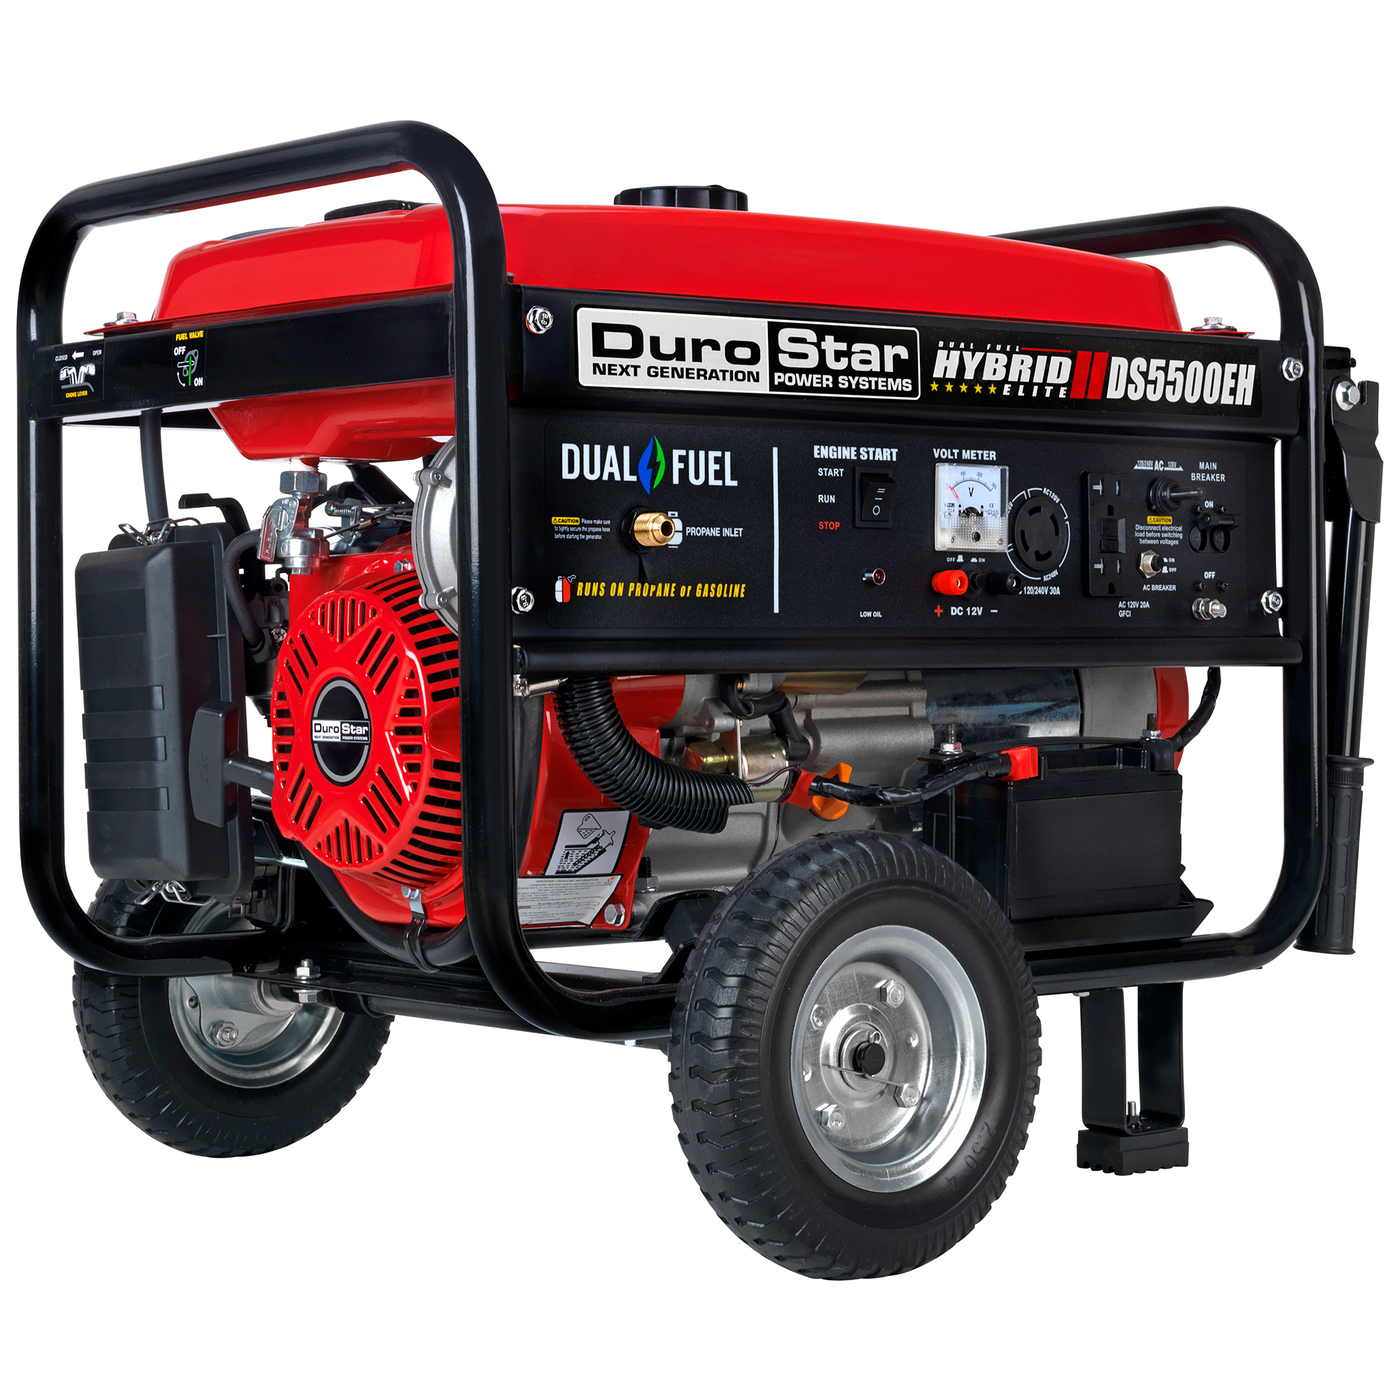 DuroStar  5,500 Watt Dual Fuel Portable Generator